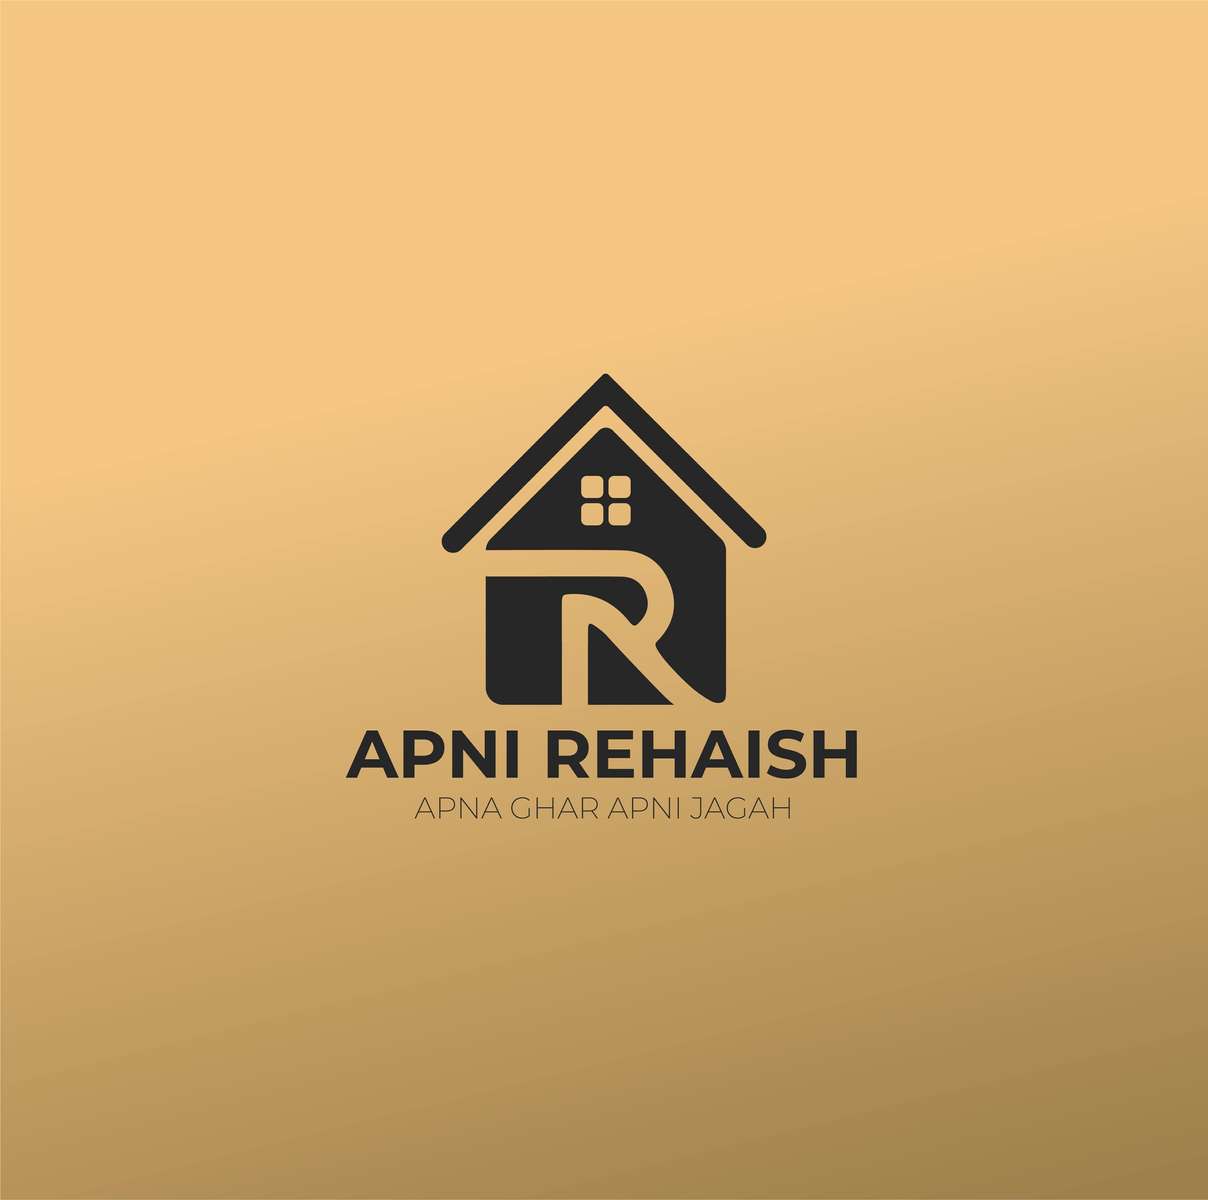 Apni Rehaish puzzle online a partir de fotografia